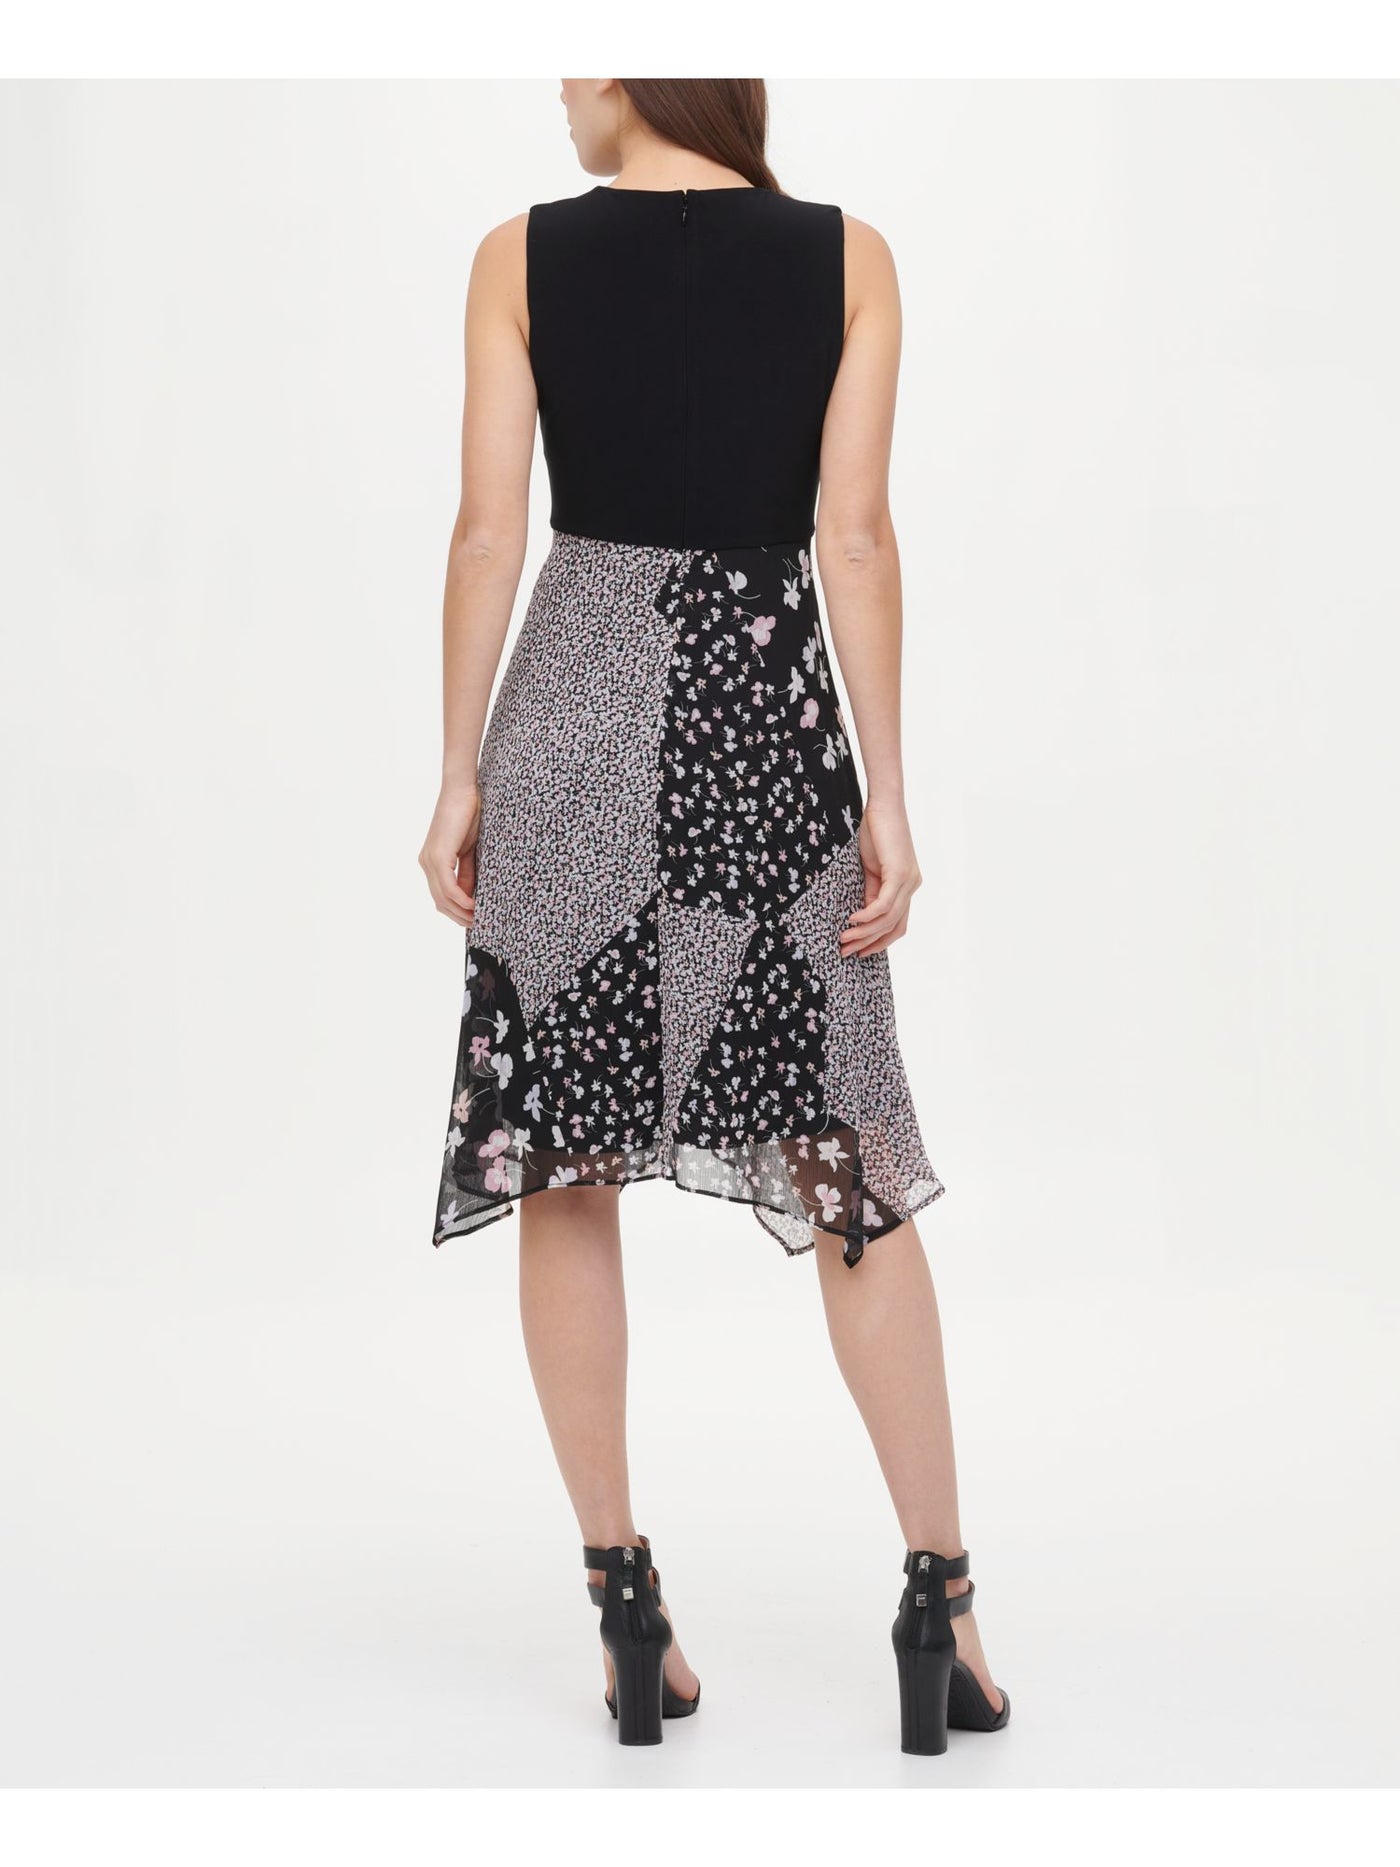 DKNY Womens Sheer Sleeveless Jewel Neck Below The Knee Evening Fit + Flare Dress